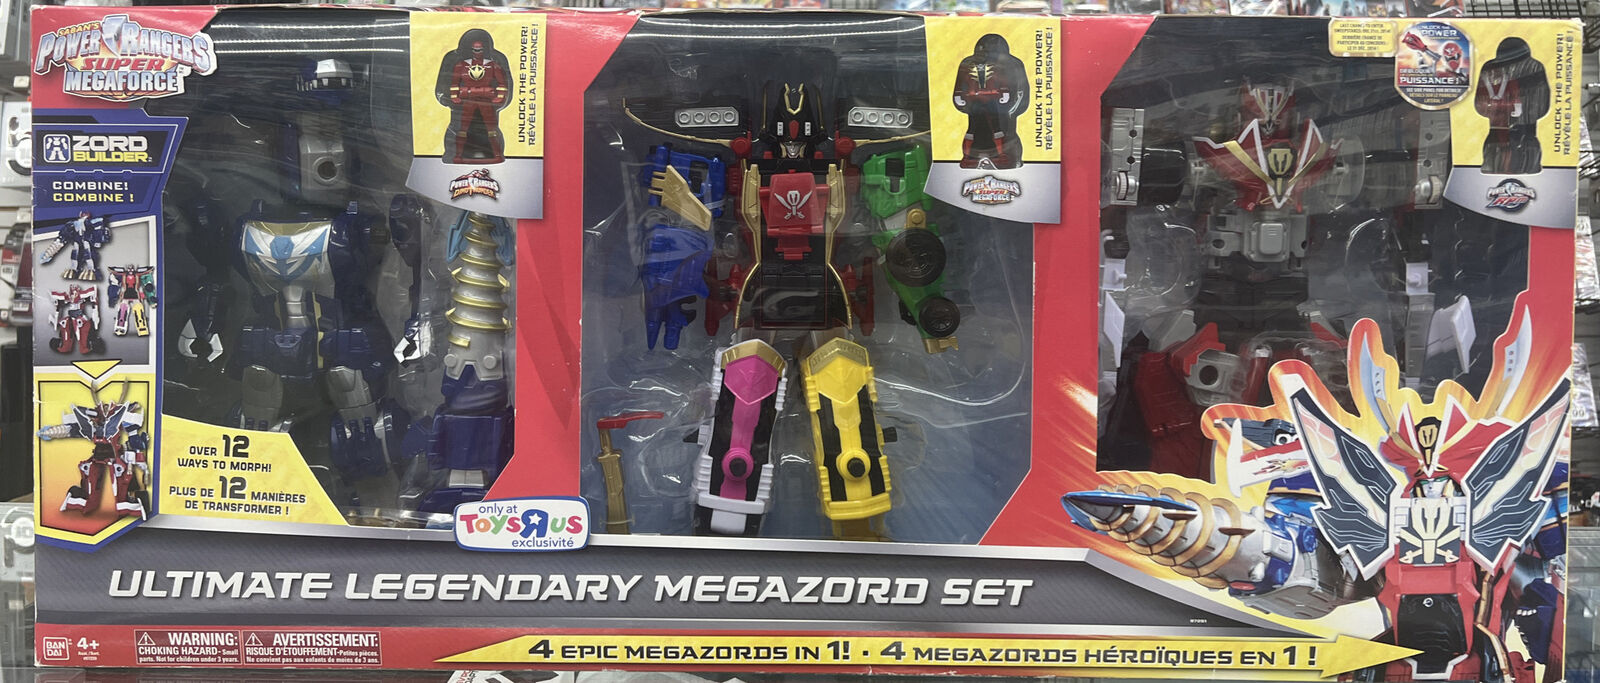 Power Rangers Deluxe Legendary Megazord - Shop Action Figures